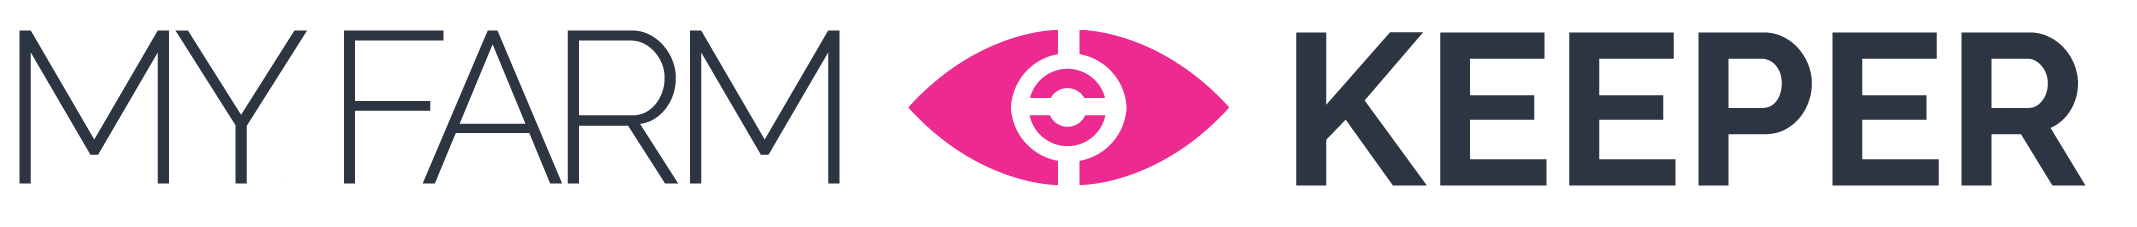 MFK_logo